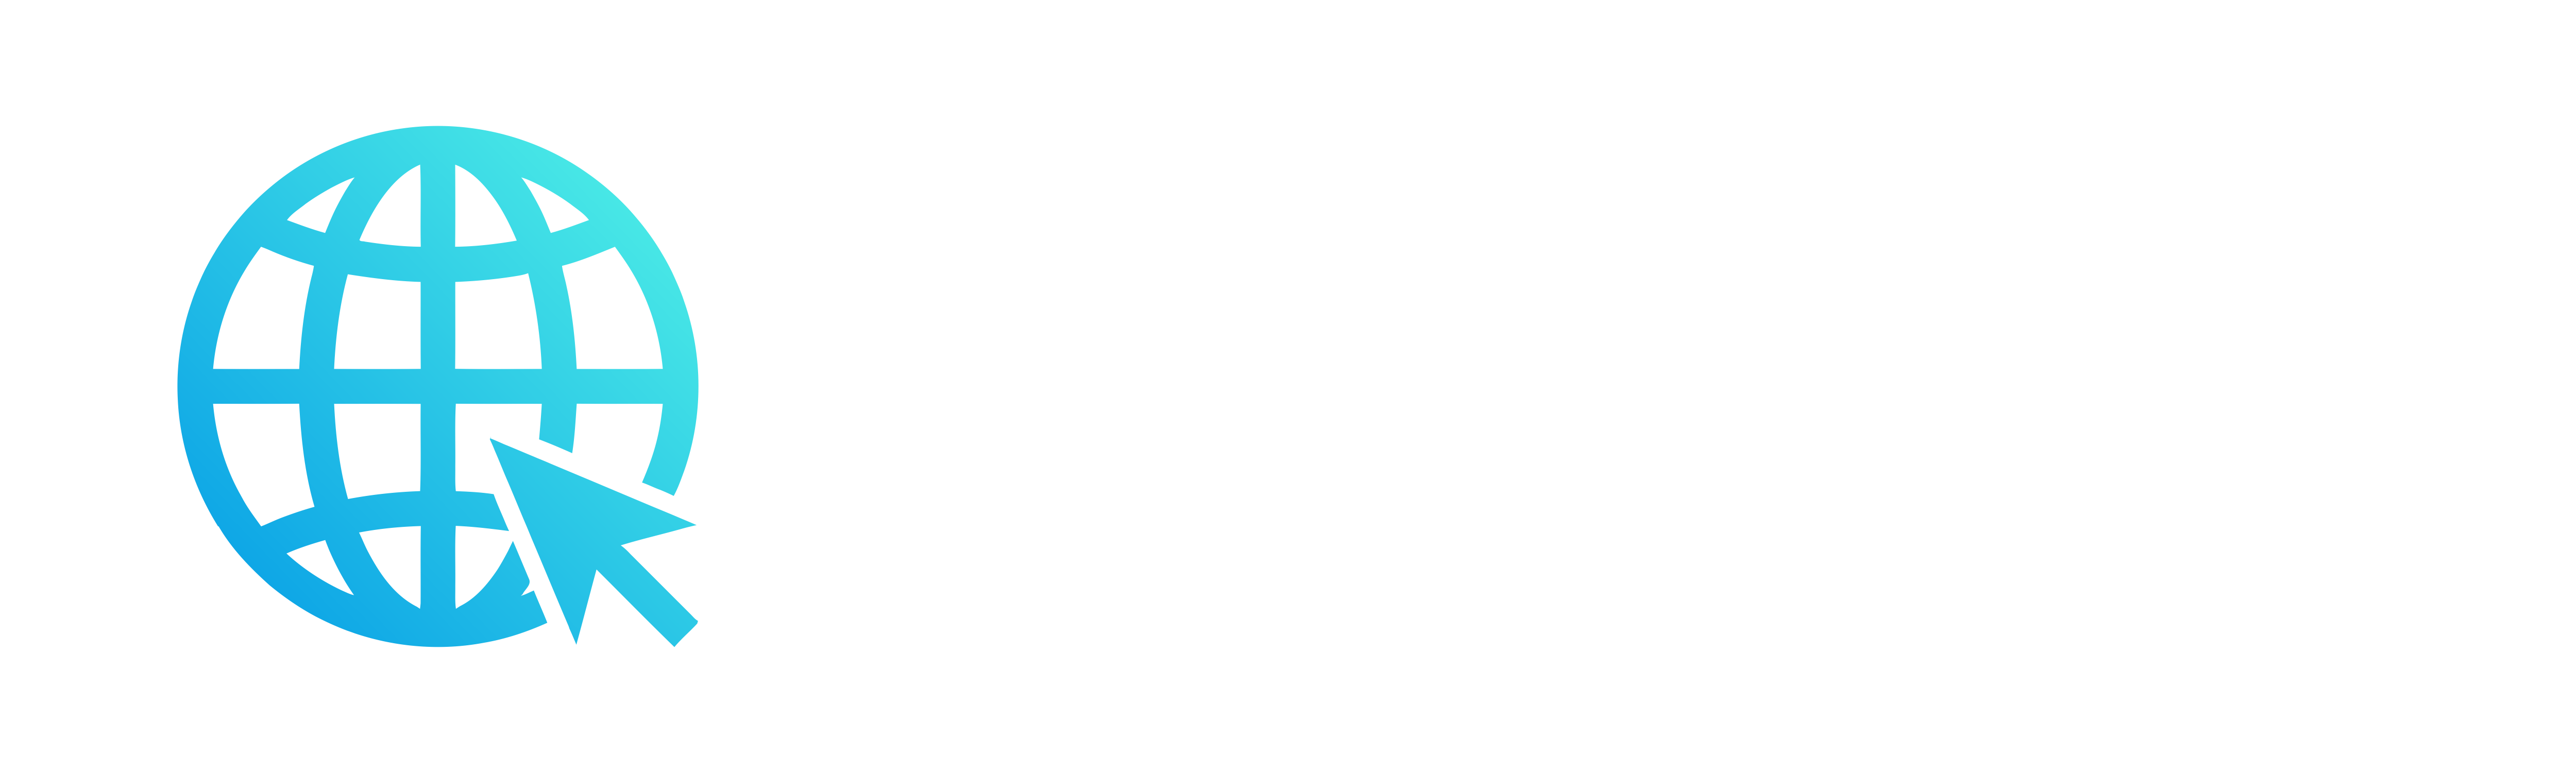 Logomarca Site.Rio.Br